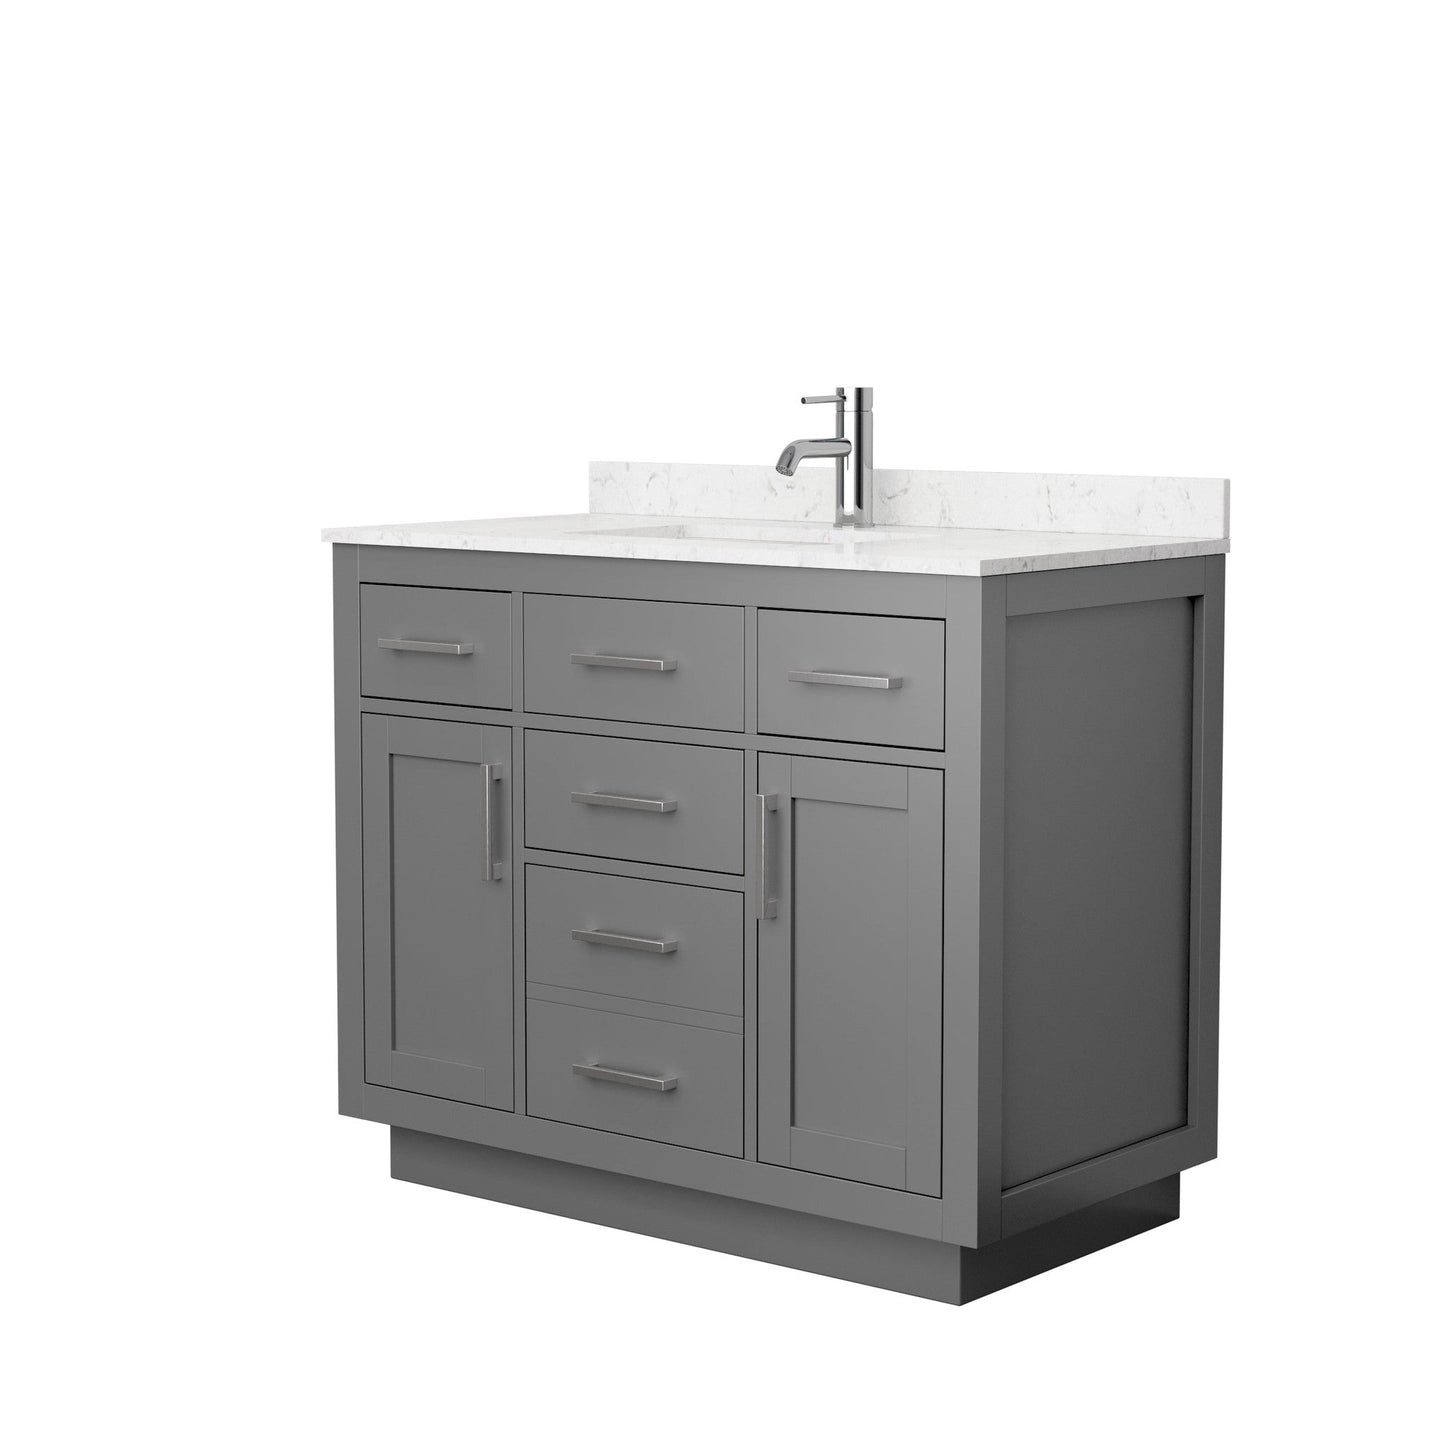 Beckett 42" Single Bathroom Vanity With Toe Kick in Dark Gray, Carrara Cultured Marble Countertop, Undermount Square Sink, Brushed Nickel Trim